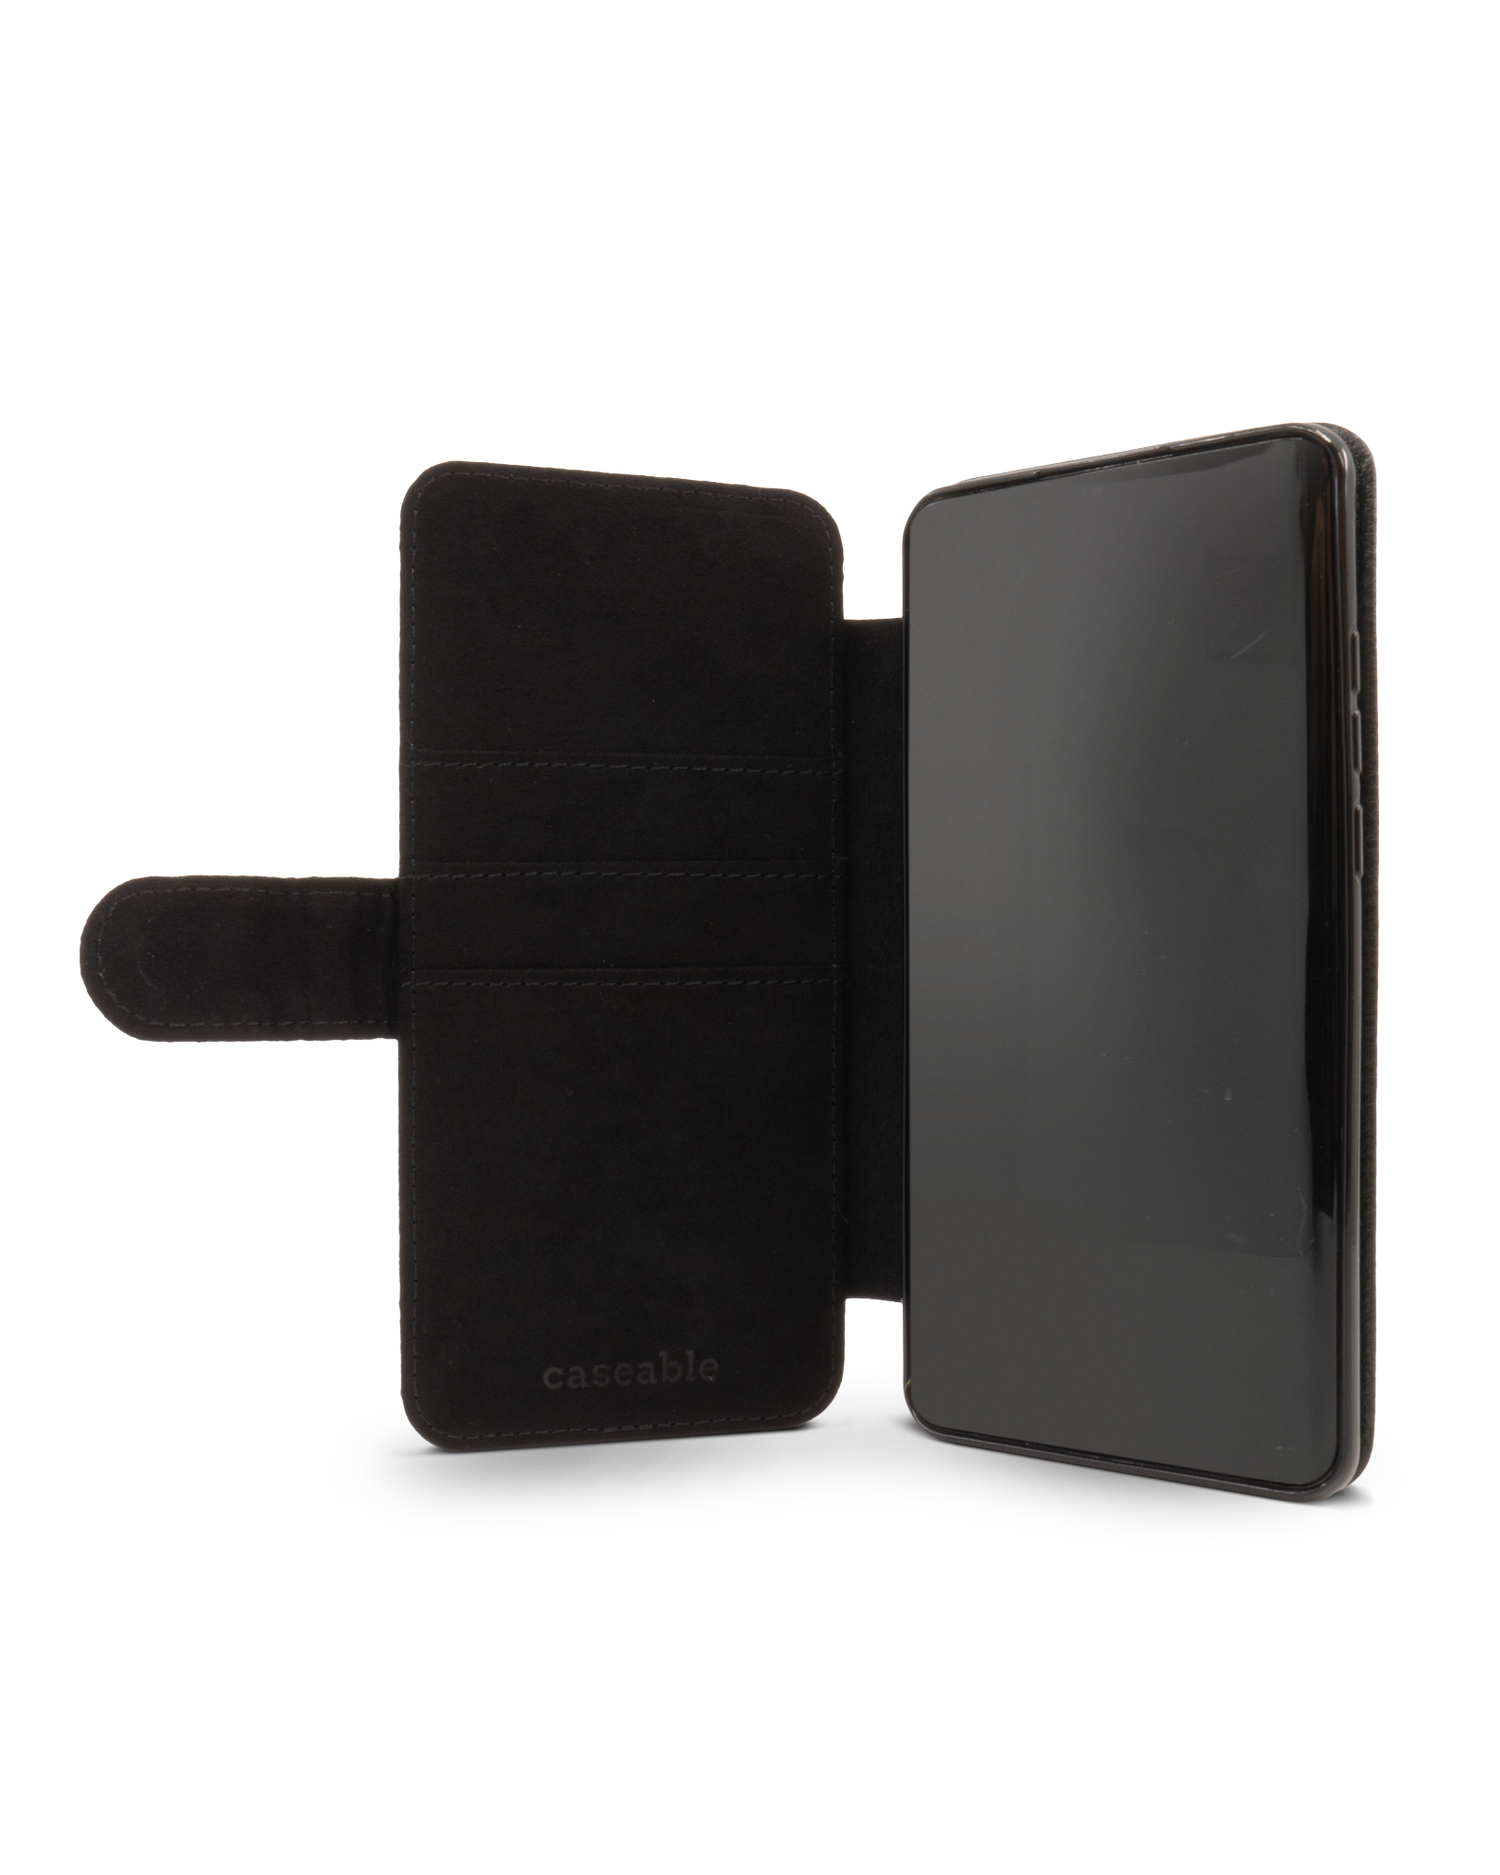 Electric Ocean 2 Wallet Phone Case Huawei P30 Pro: Inside View